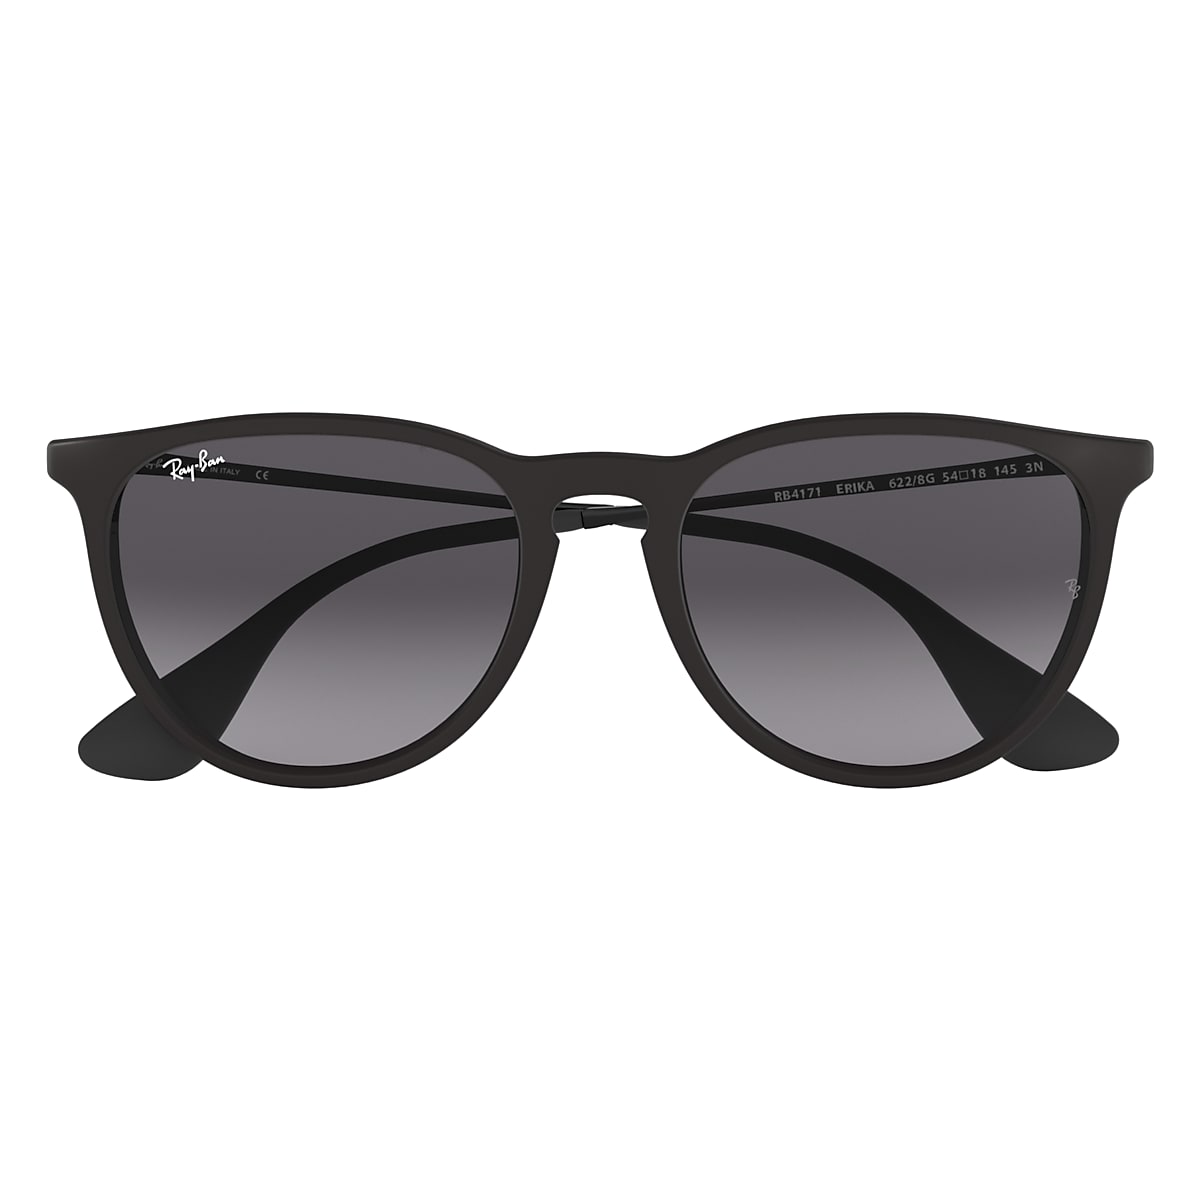 jewelry Perth Blackborough hell Erika Classic Sunglasses in Black and Grey | Ray-Ban®